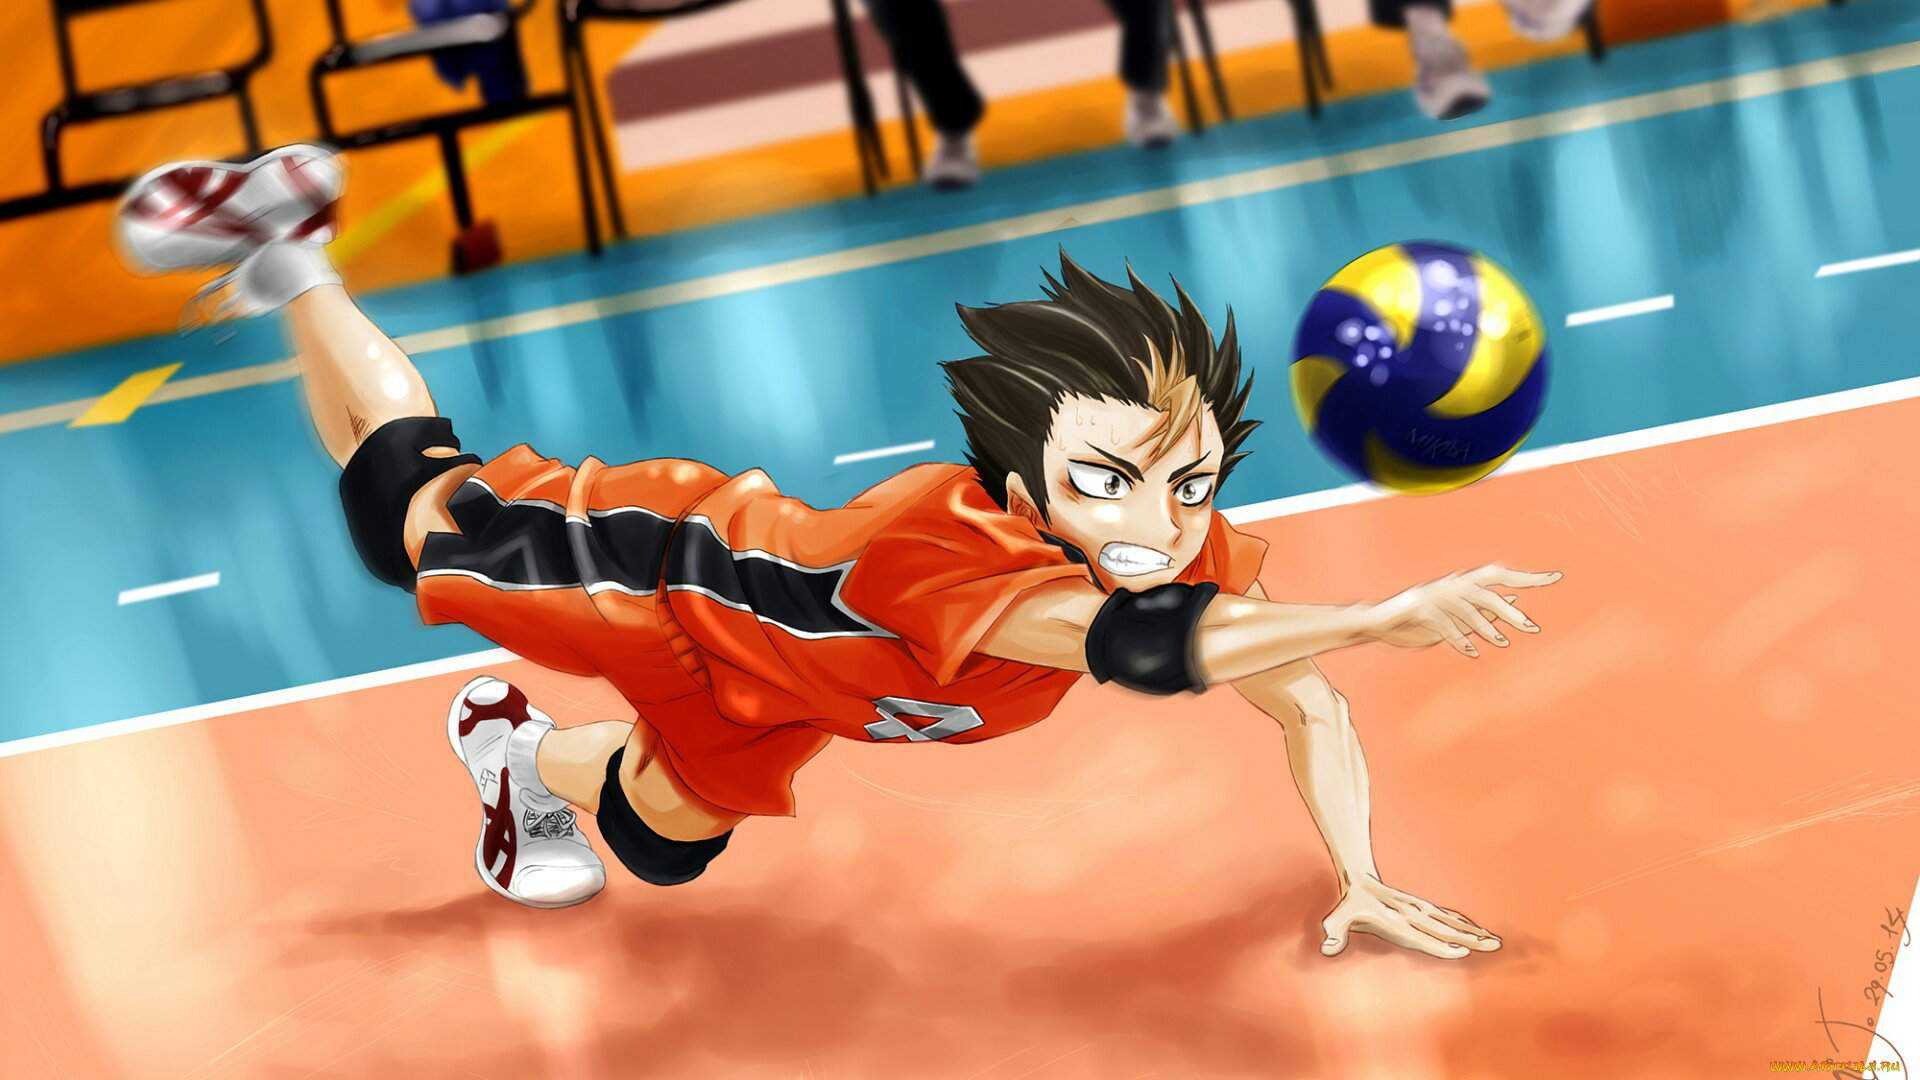 Kageyama Tobio from the anime series Haikyuu. - Volleyball